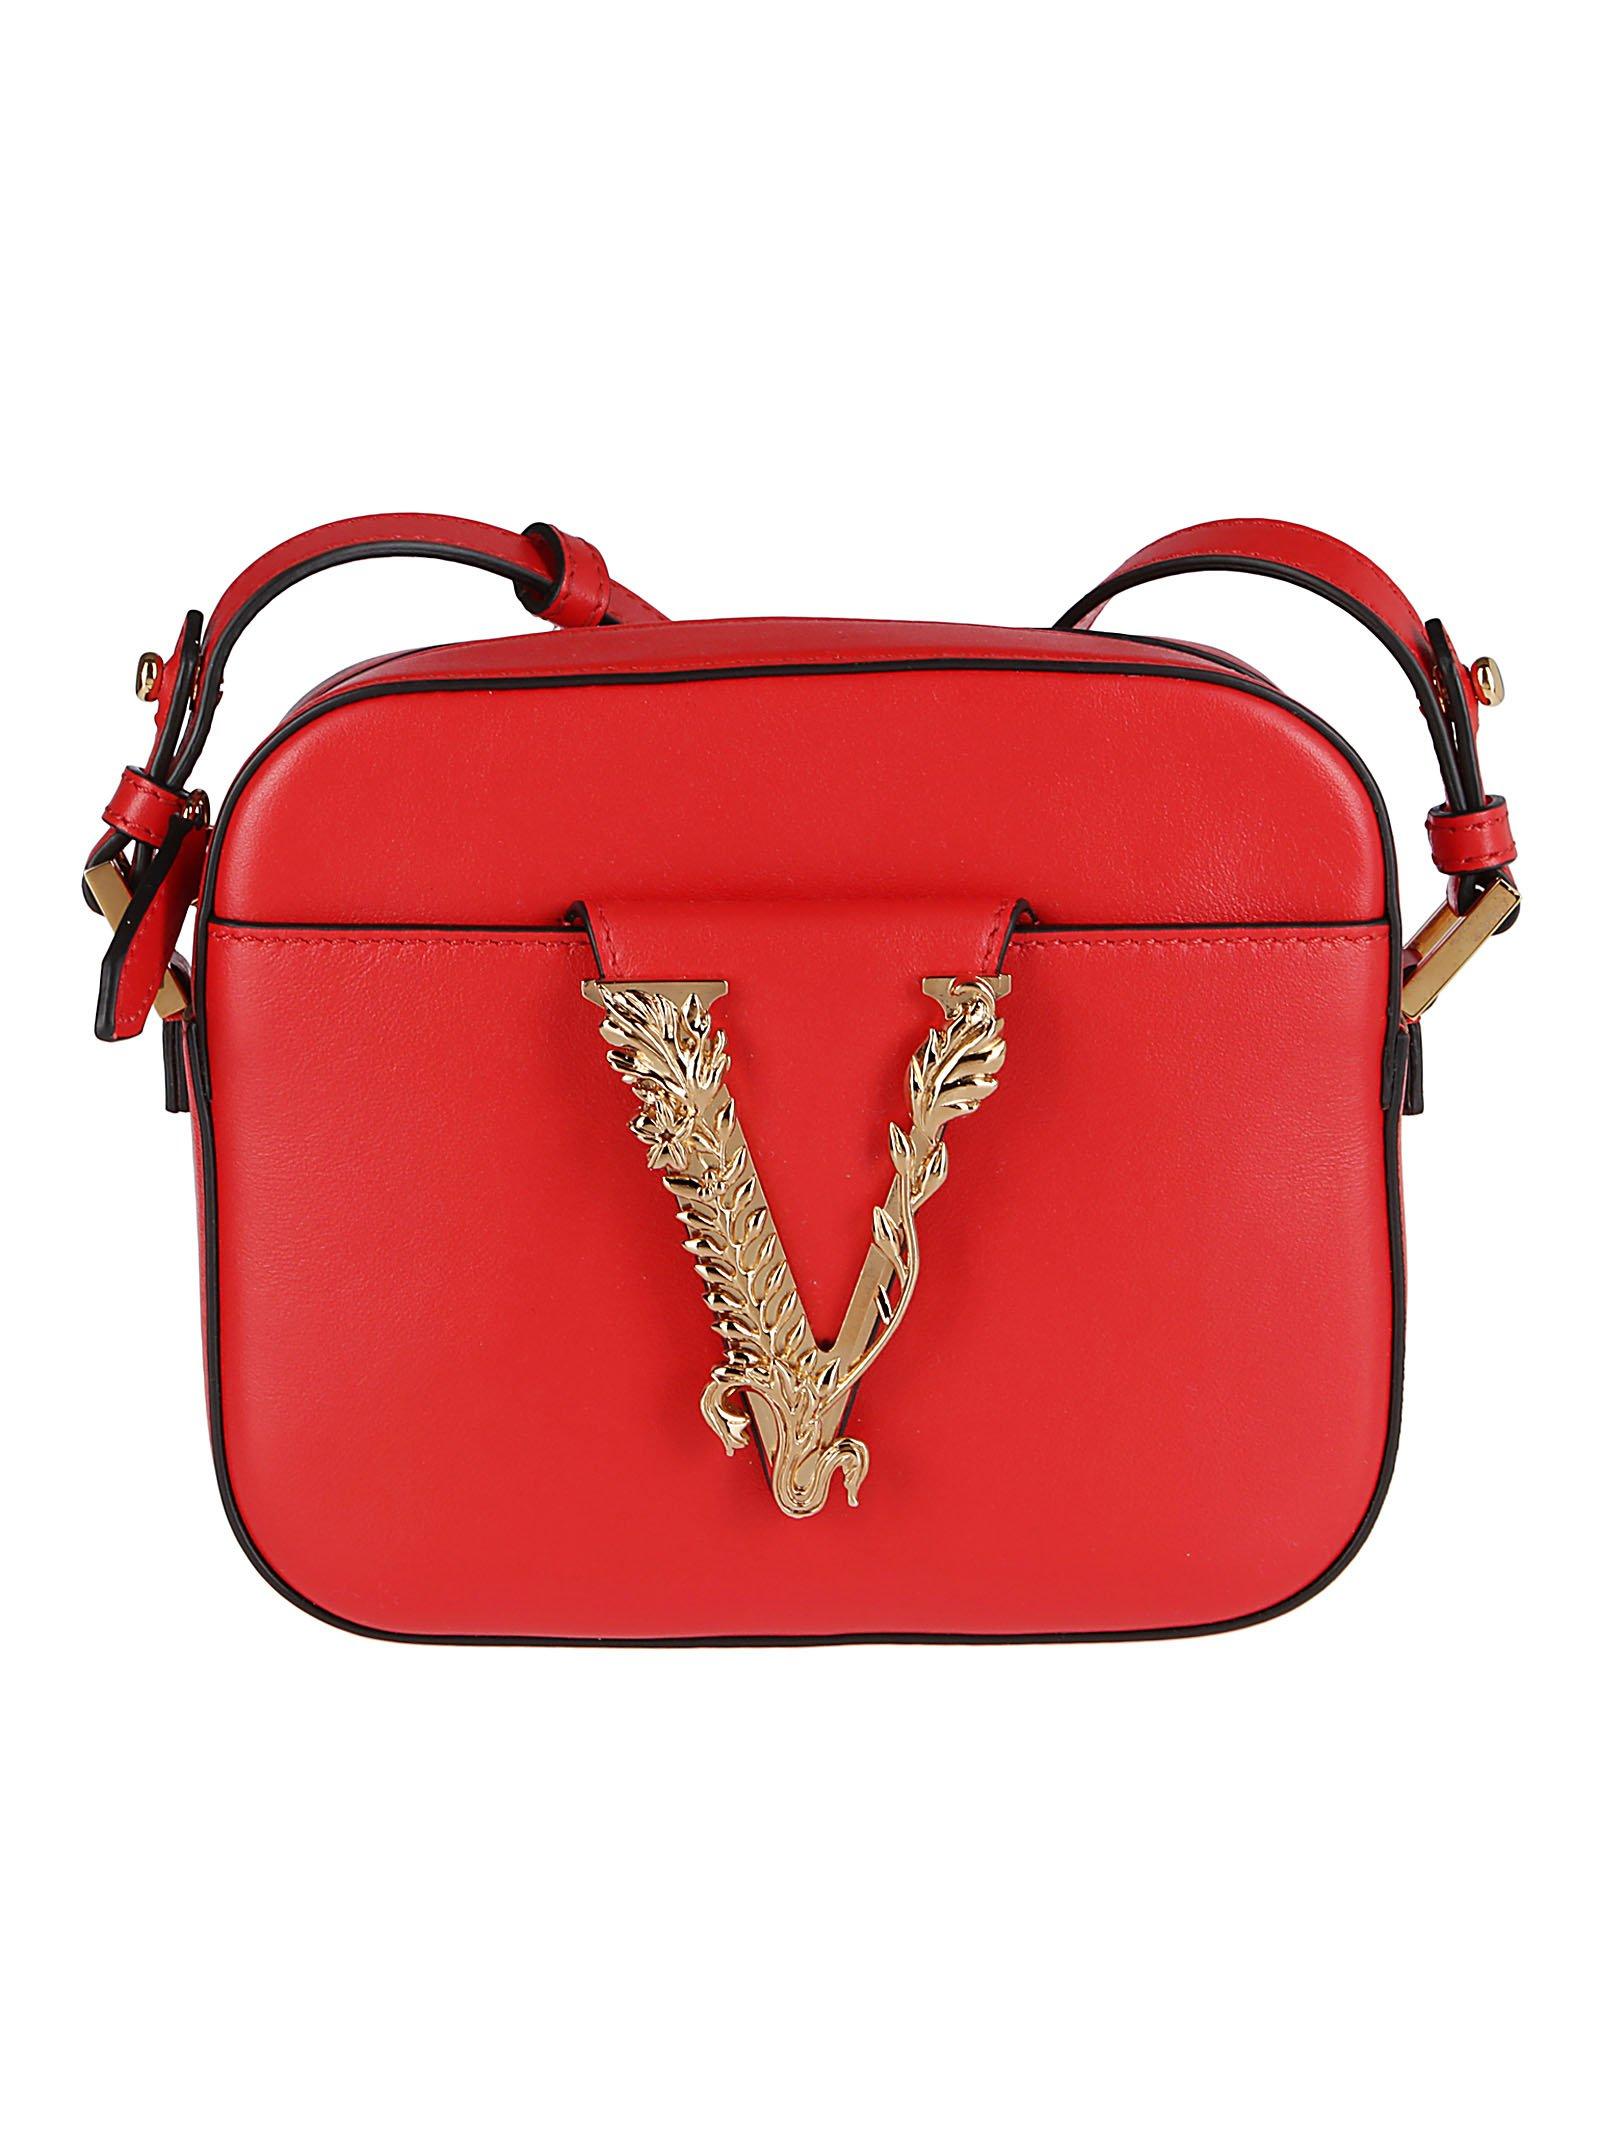 versace bag red